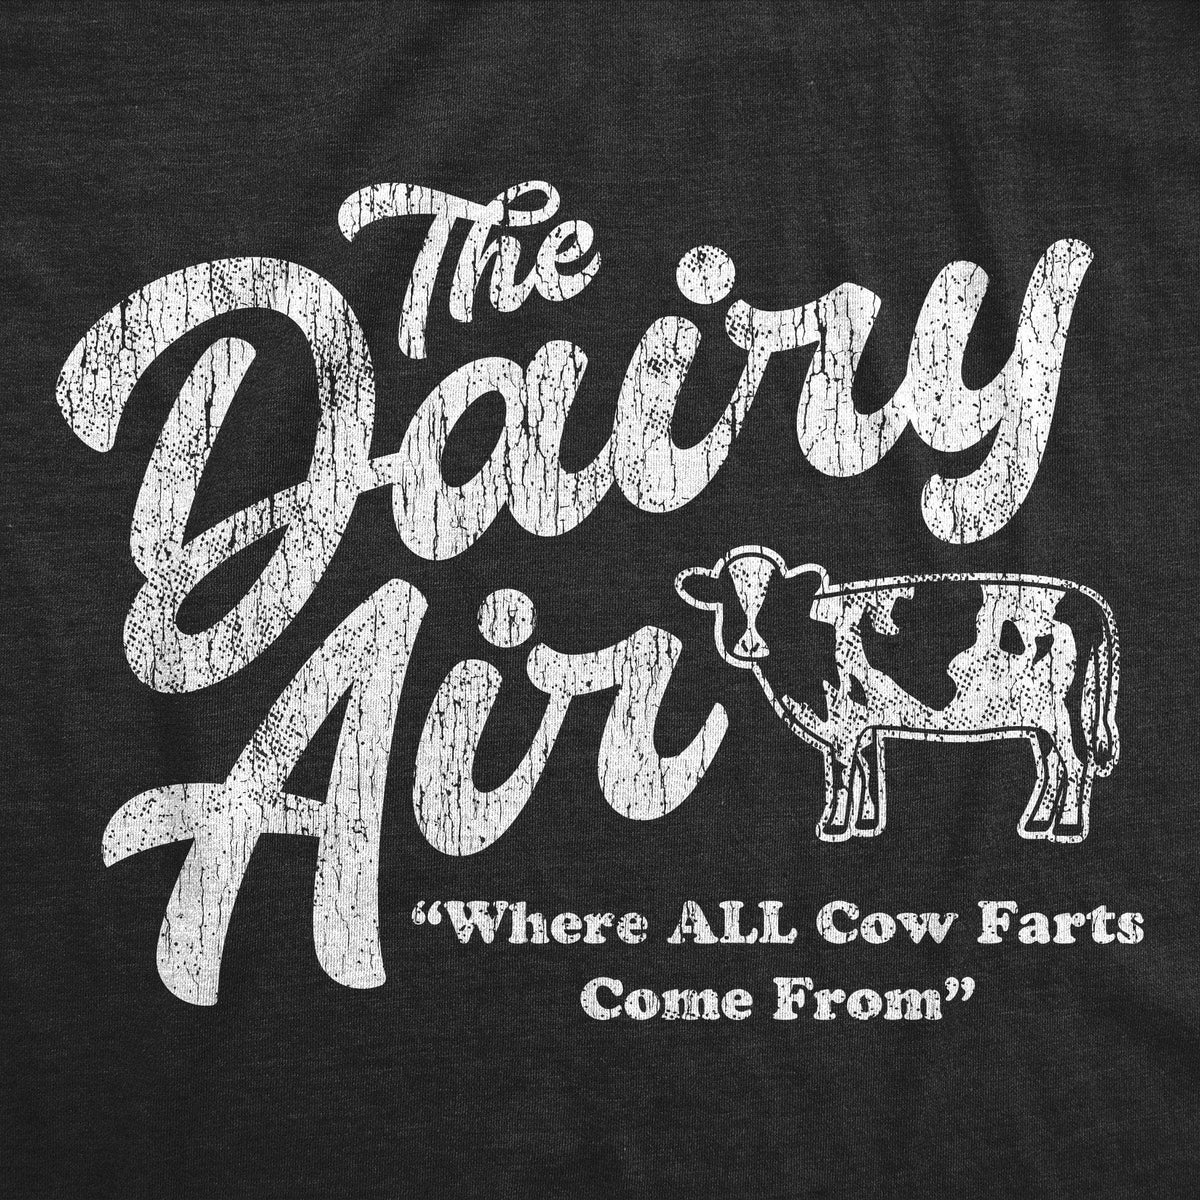 The Dairy Air Women&#39;s Tshirt - Crazy Dog T-Shirts